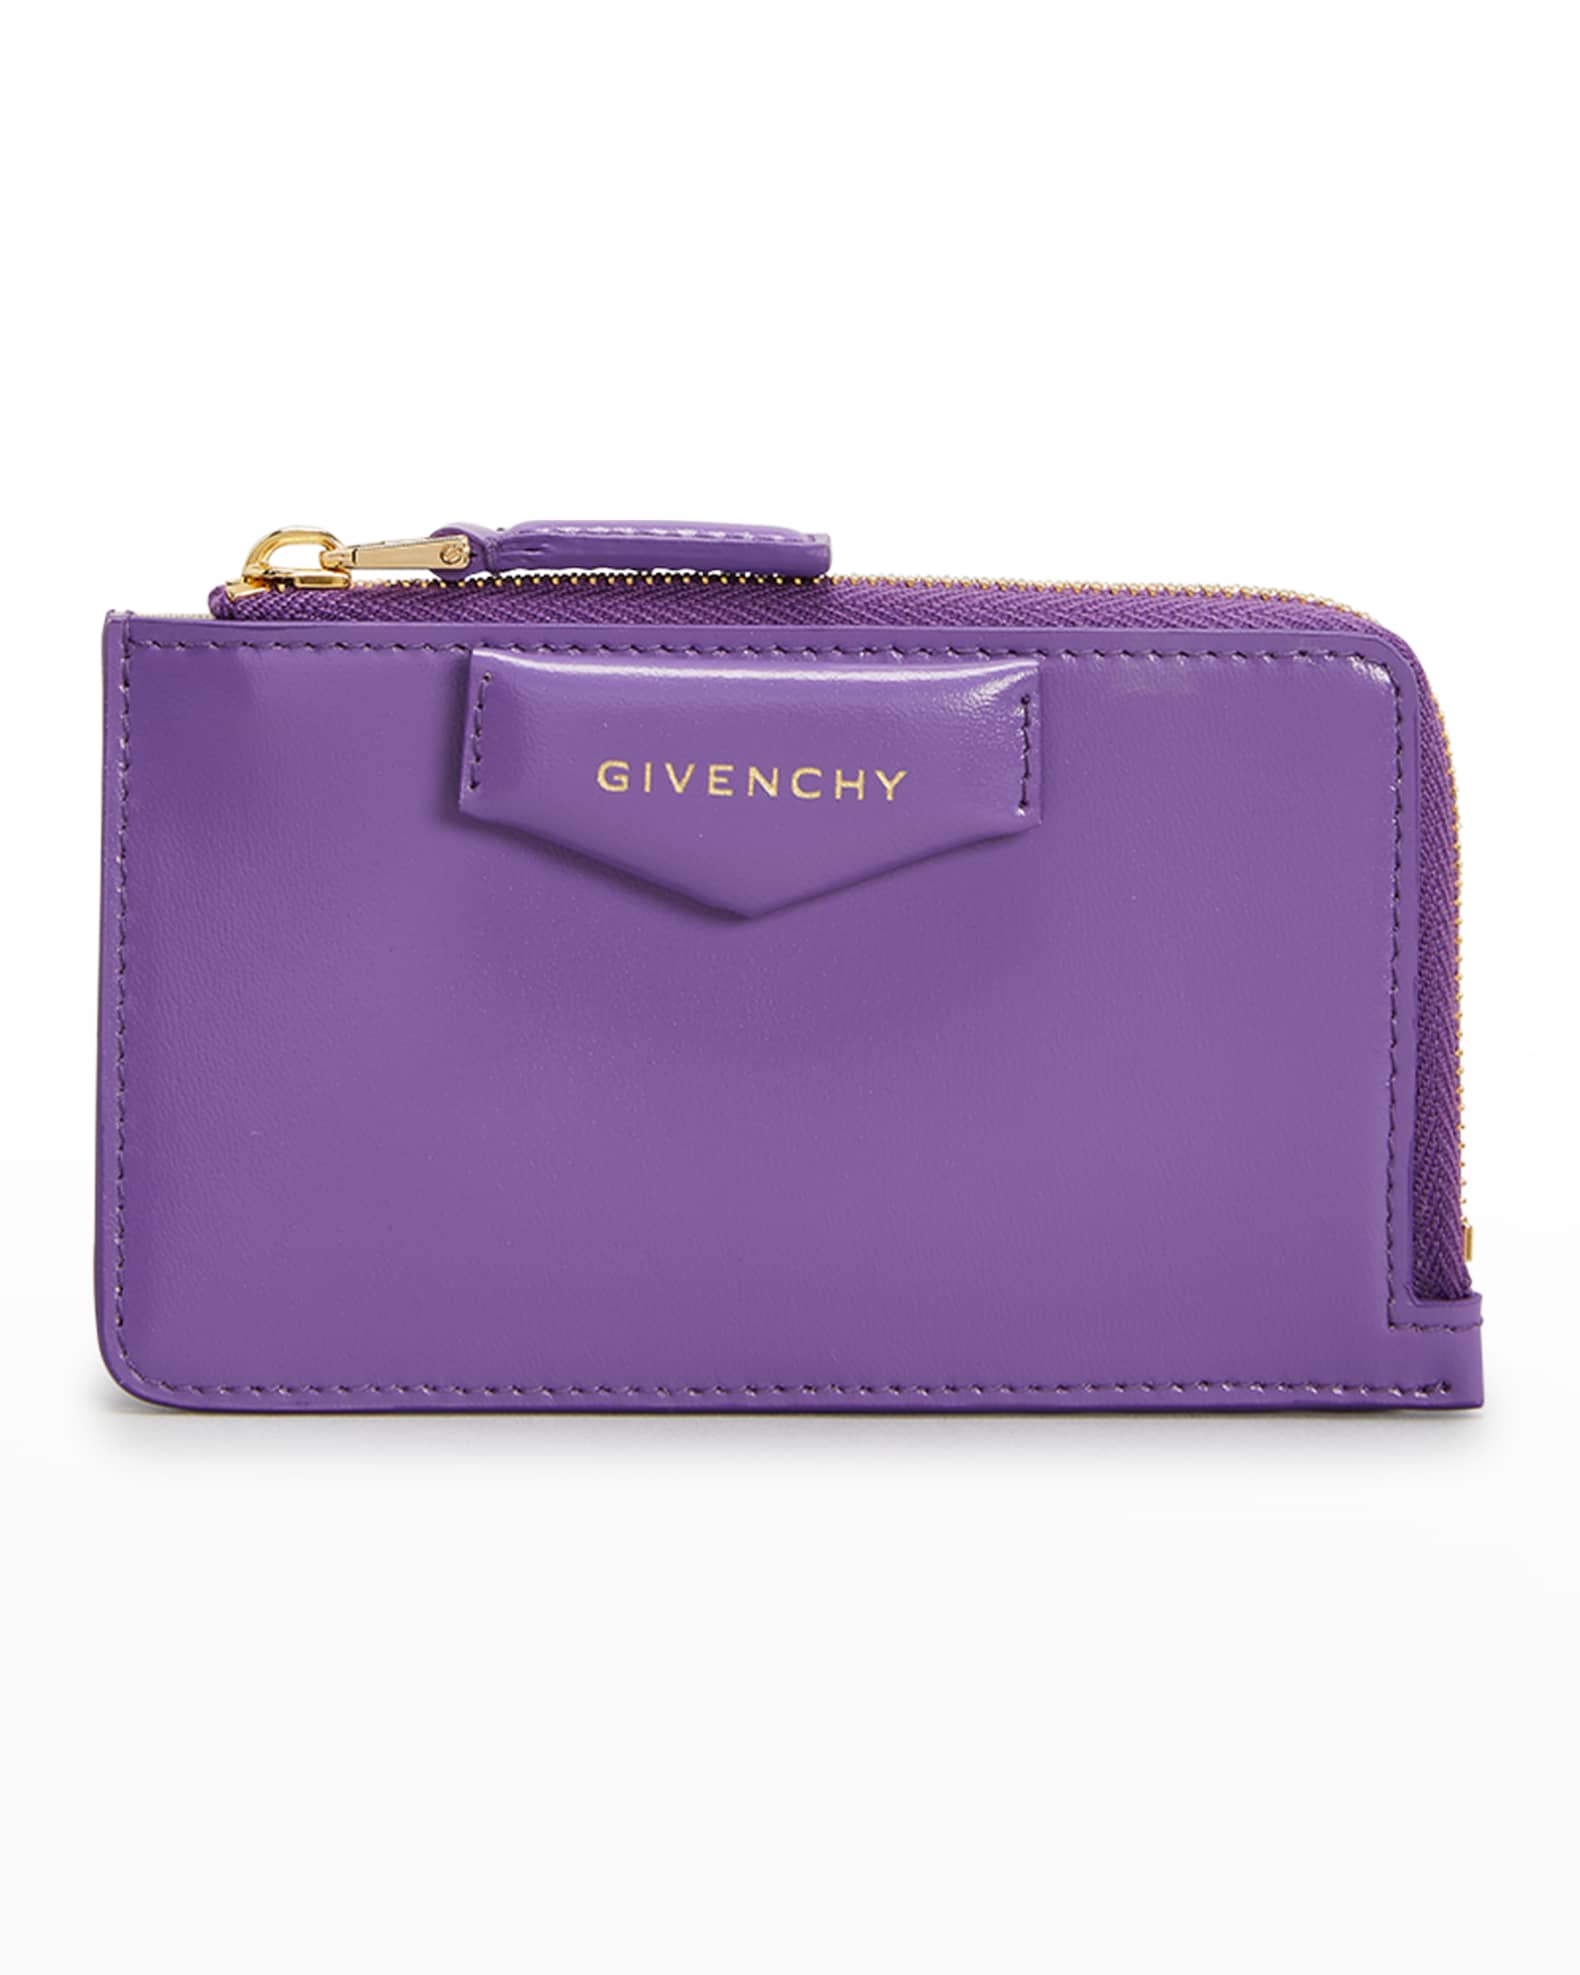 Givenchy Antigona Zip Card Holder in Calf Leather | Neiman Marcus